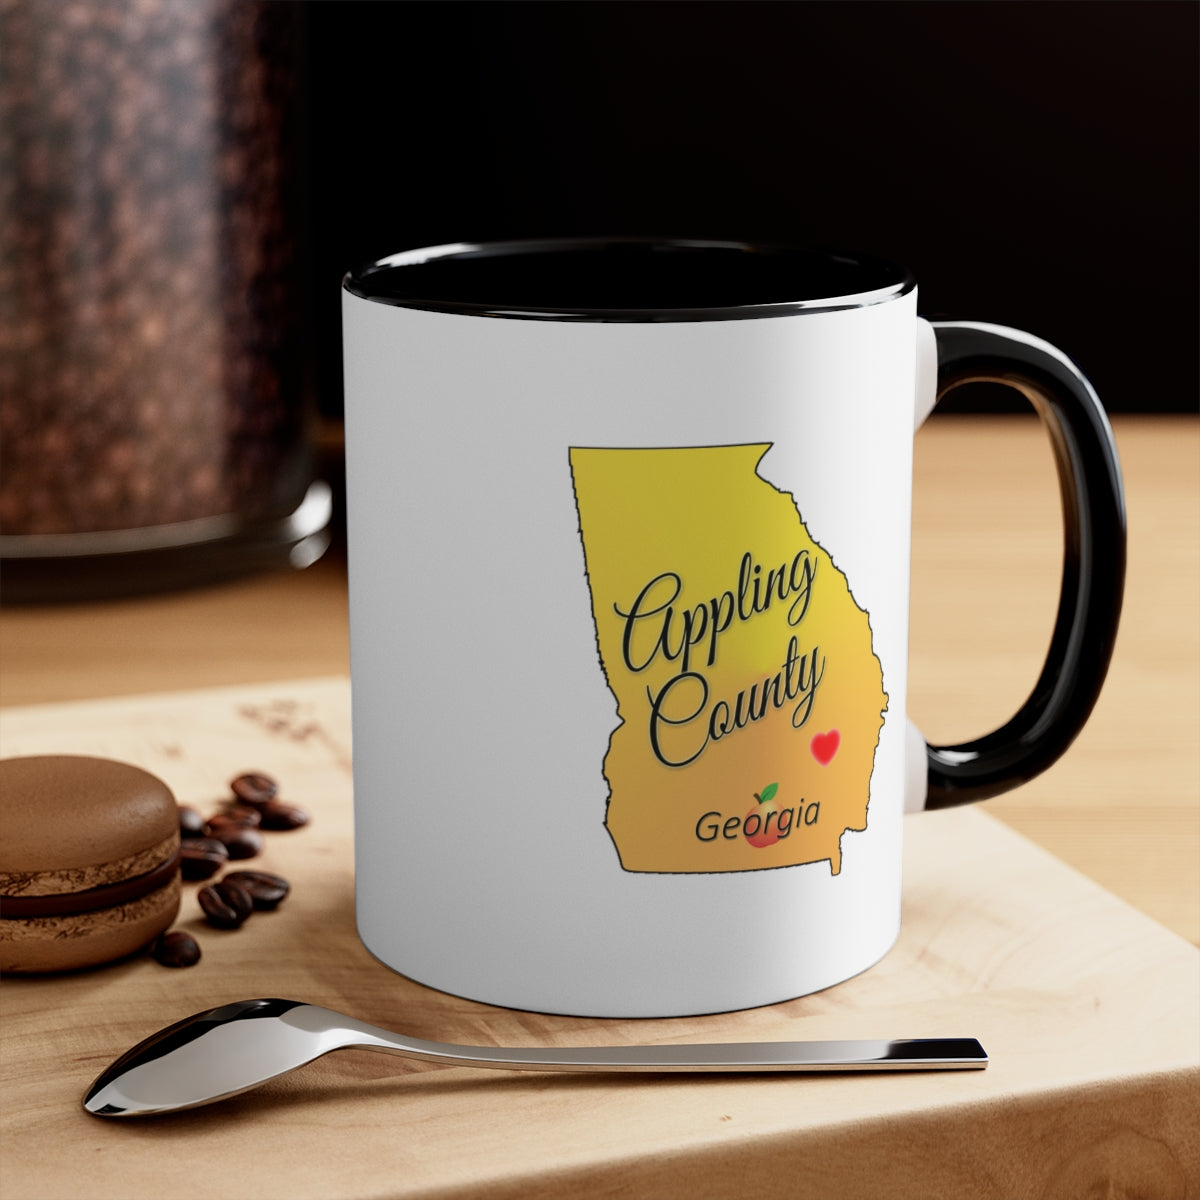 Appling County Georgia 11 oz Accent Ceramic Coffee Mug